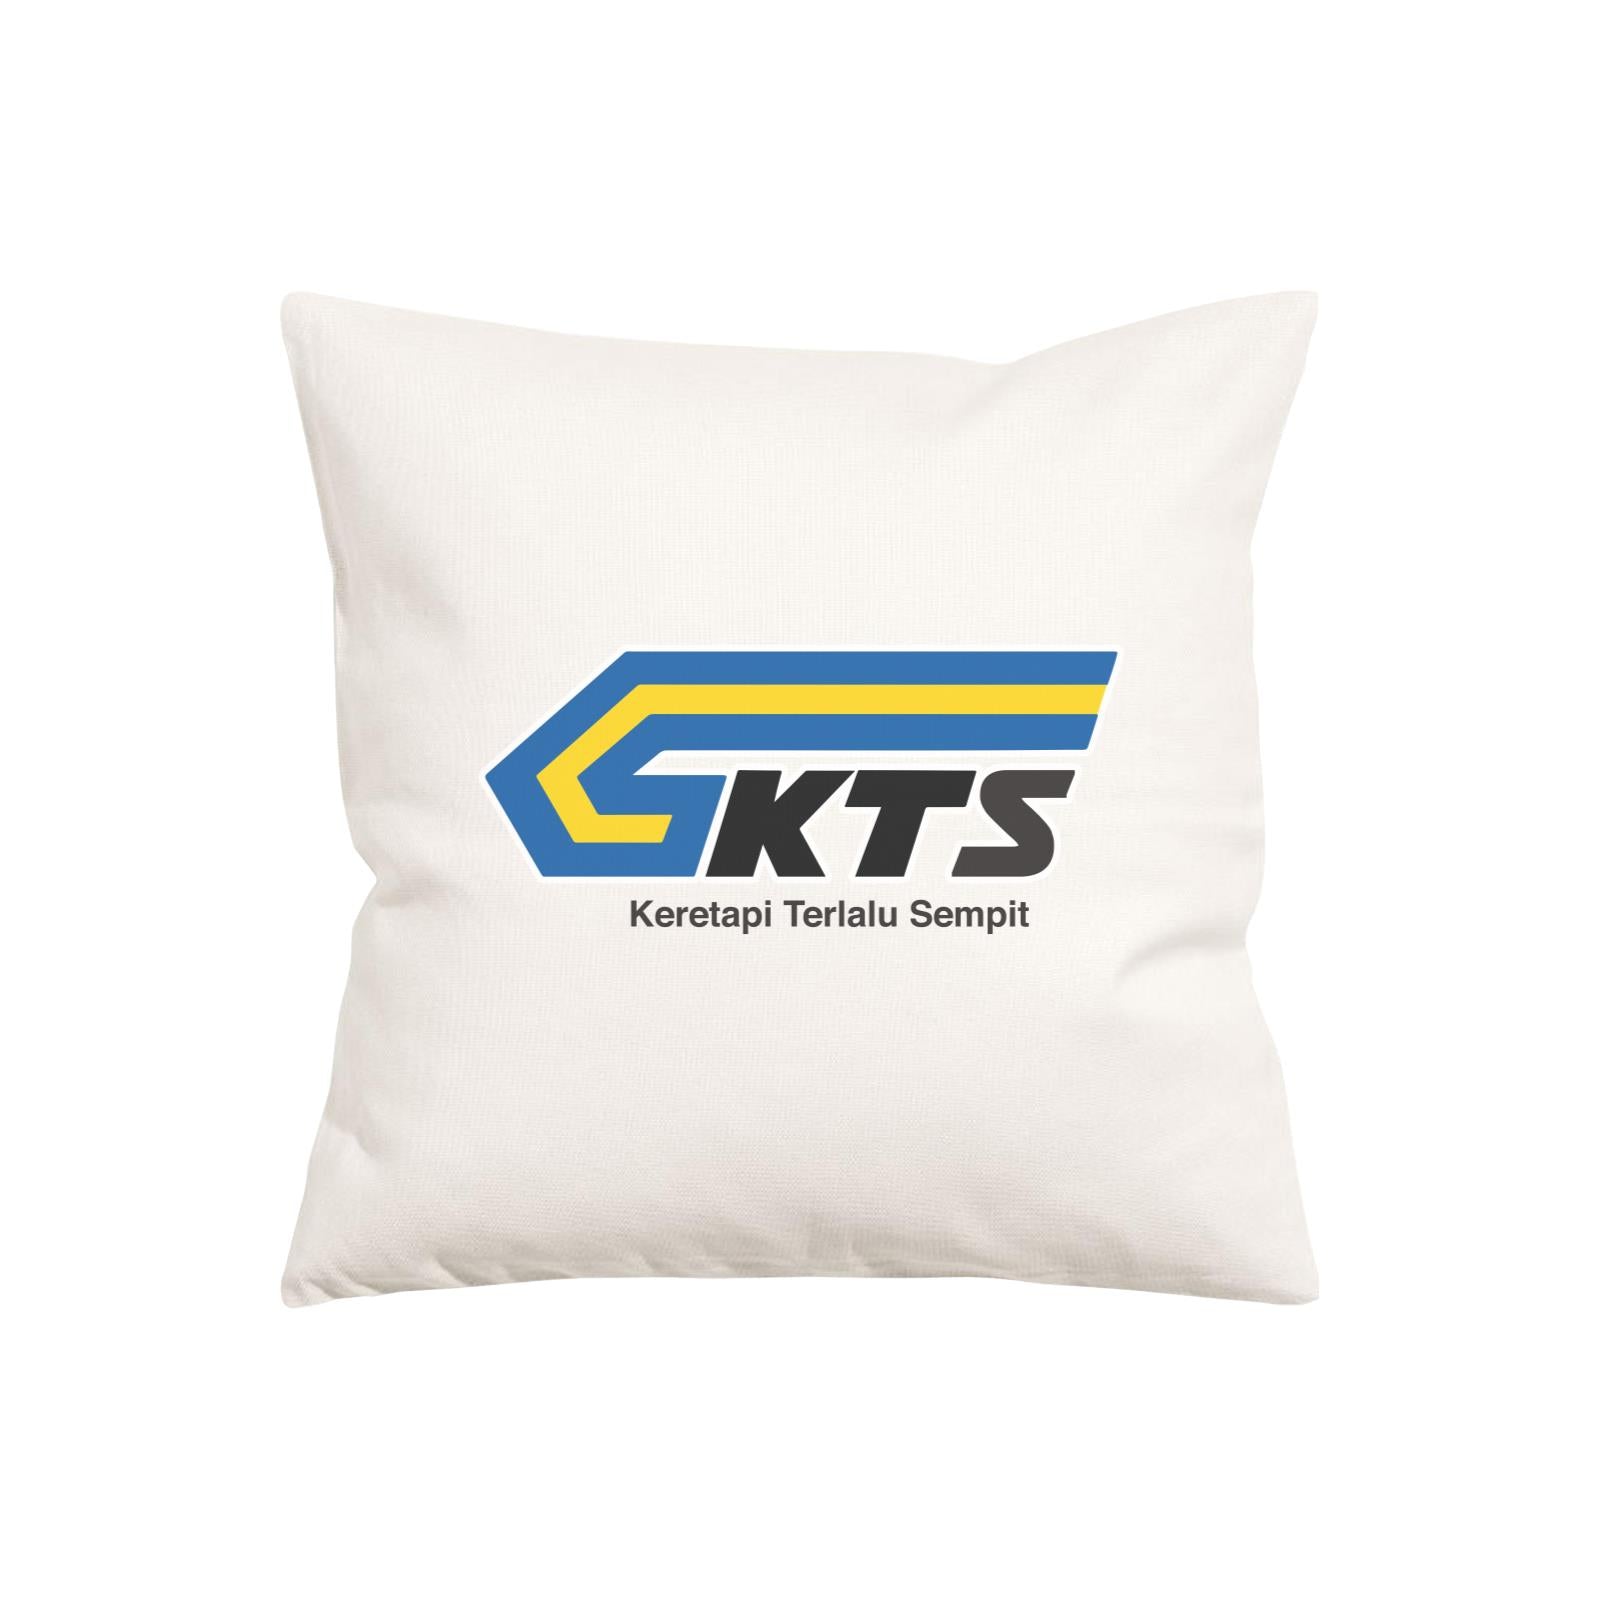 Slang Statement KTS Pillow Cushion